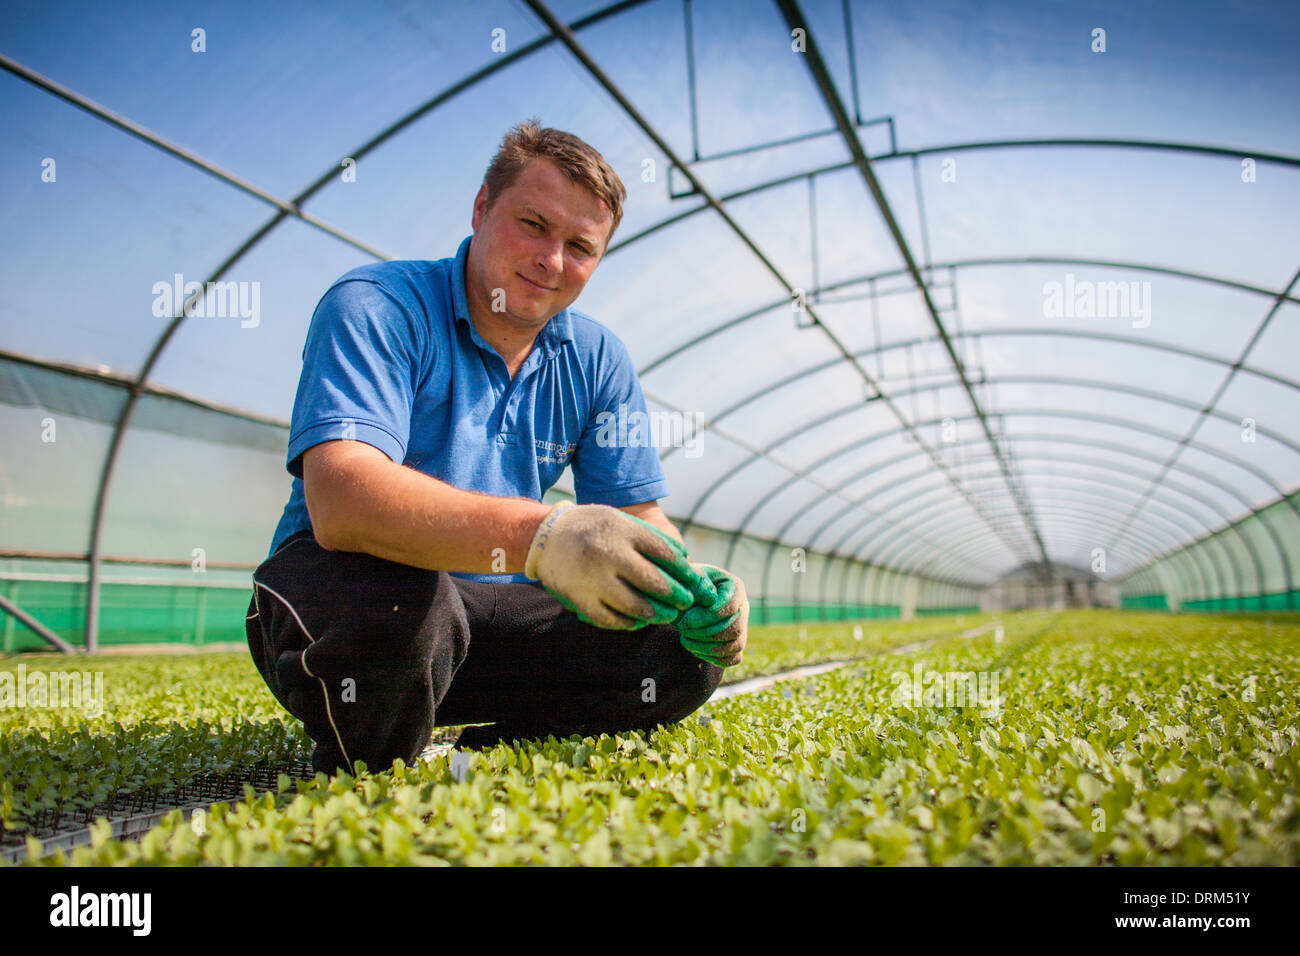 An eastern european seasonal migrant worker tending seedlings in a polytunnel, Truro, Cornwall, UK Stock Photo